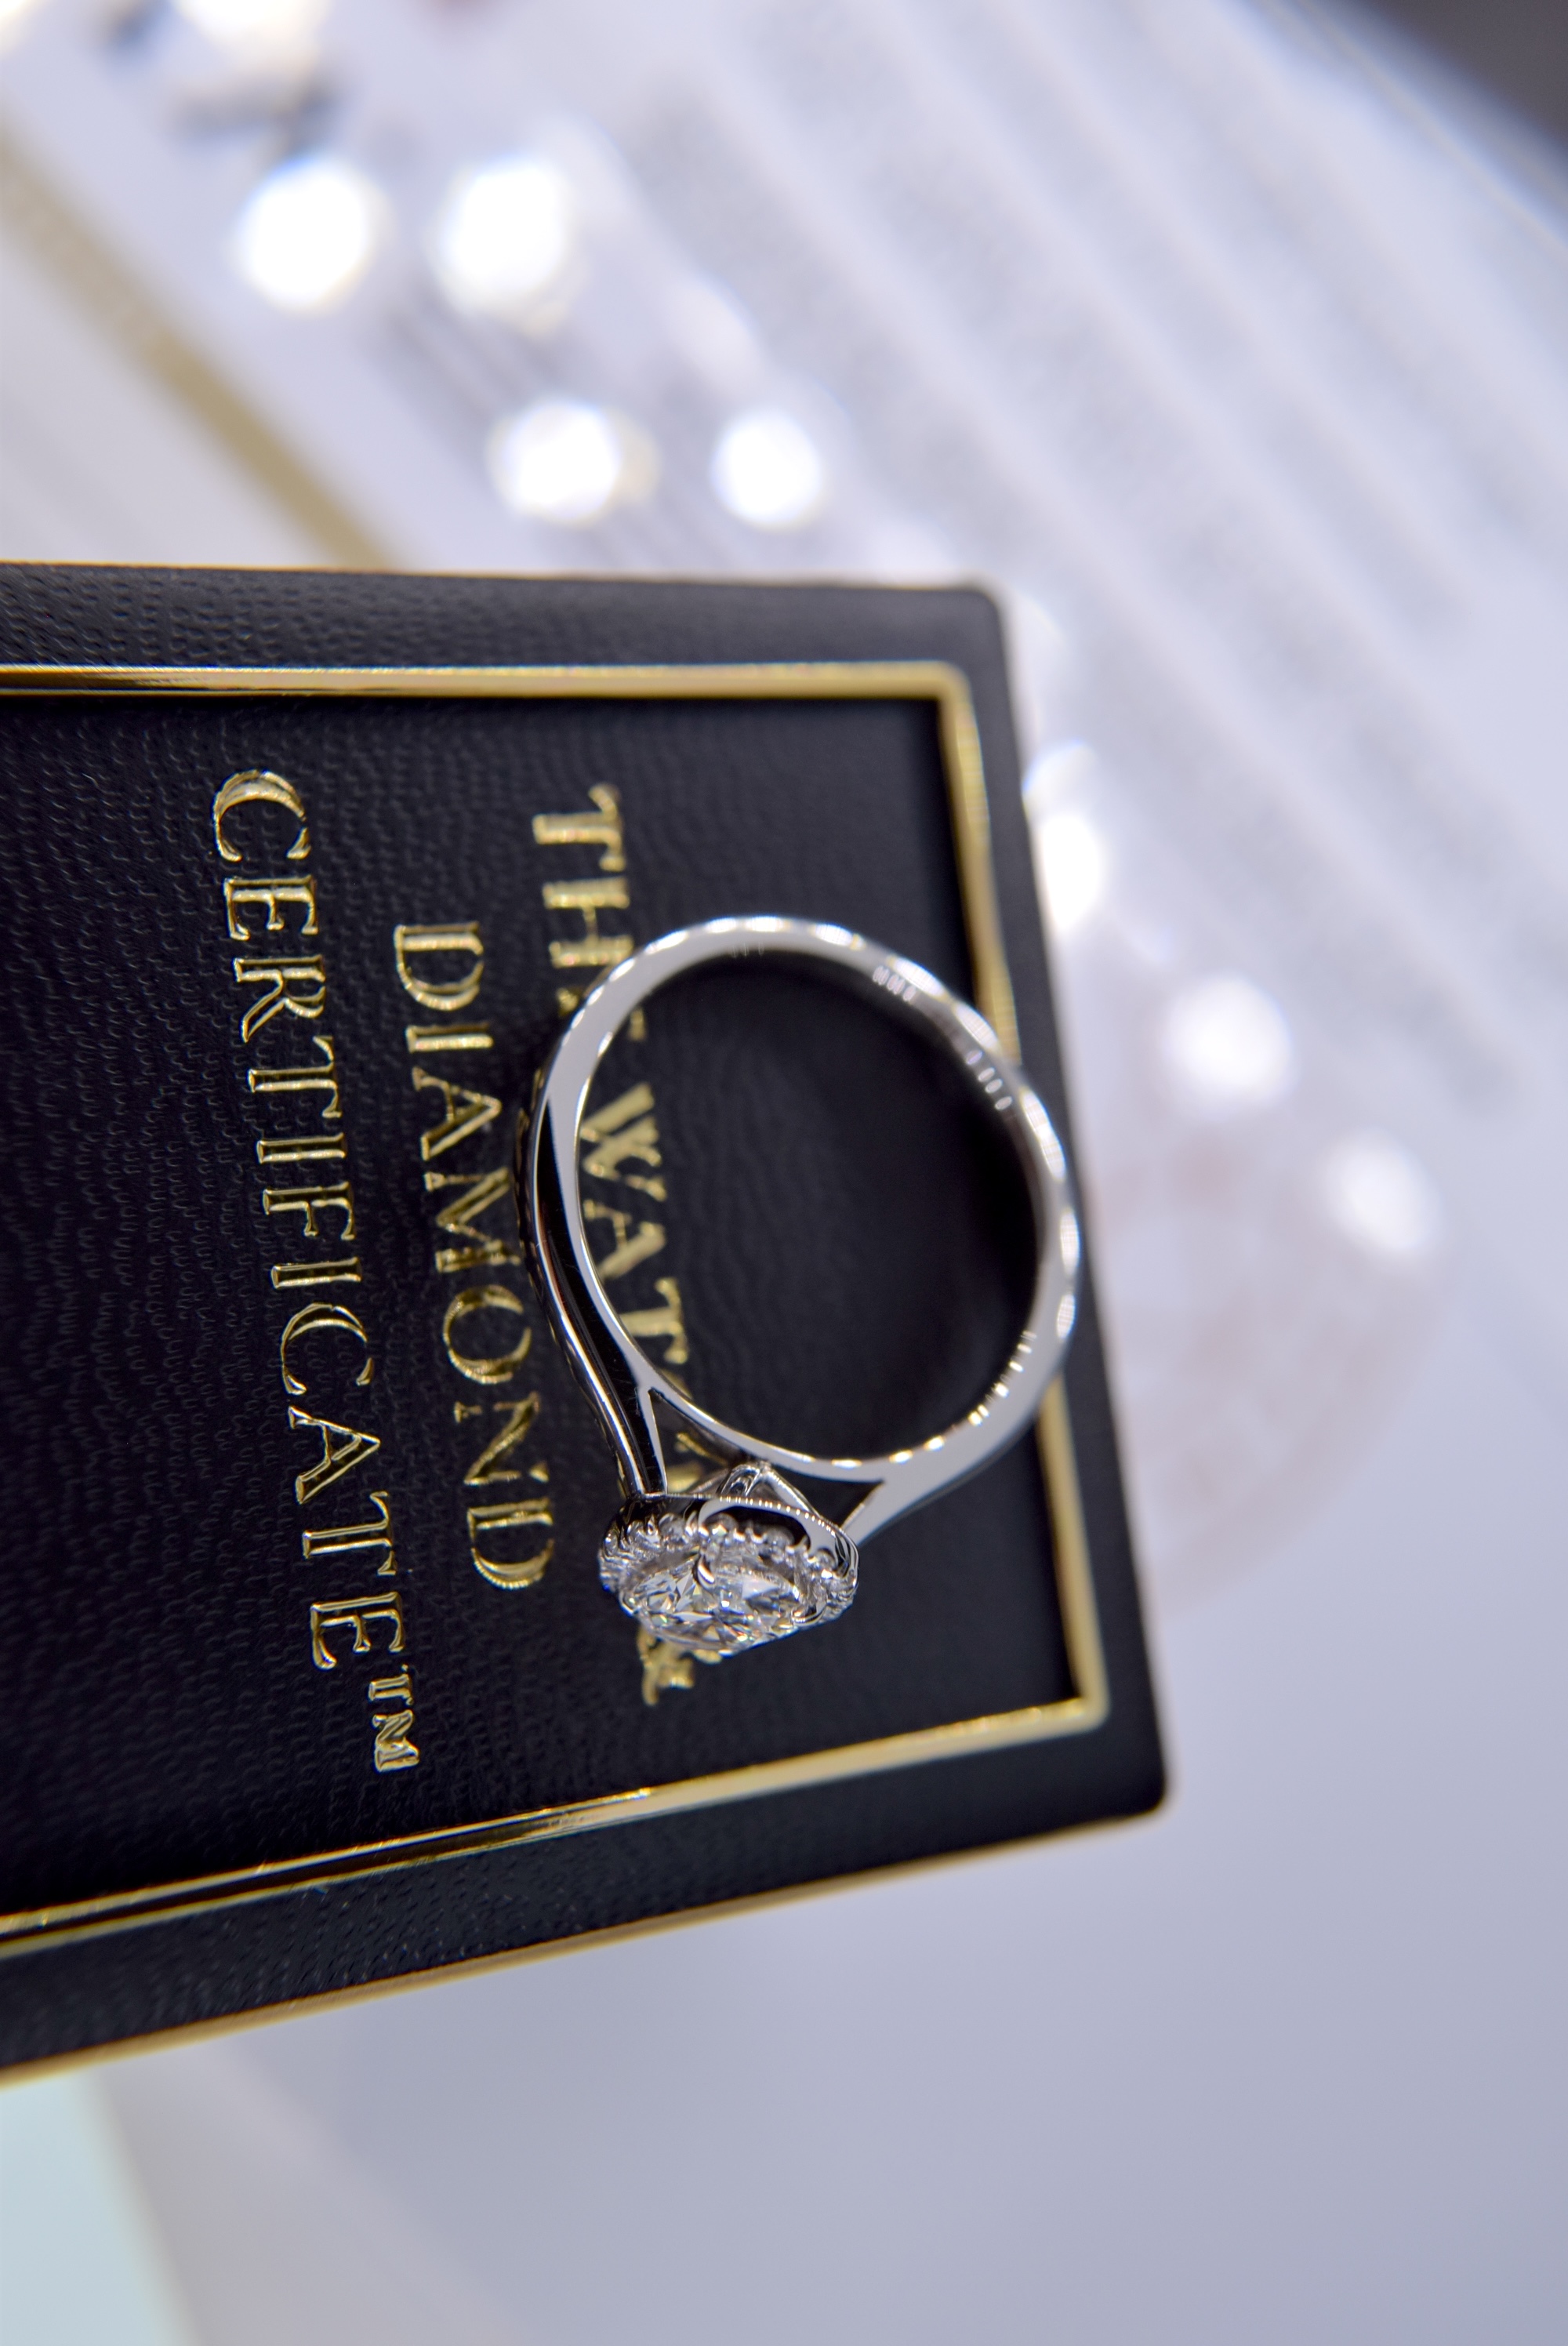 GIA DIAMOND PLATINUM HALO OVAL RING - WITH GIA DIAMOND DOSSIER CERT/ £4,995.00 VALUATION & BOX - Image 4 of 14